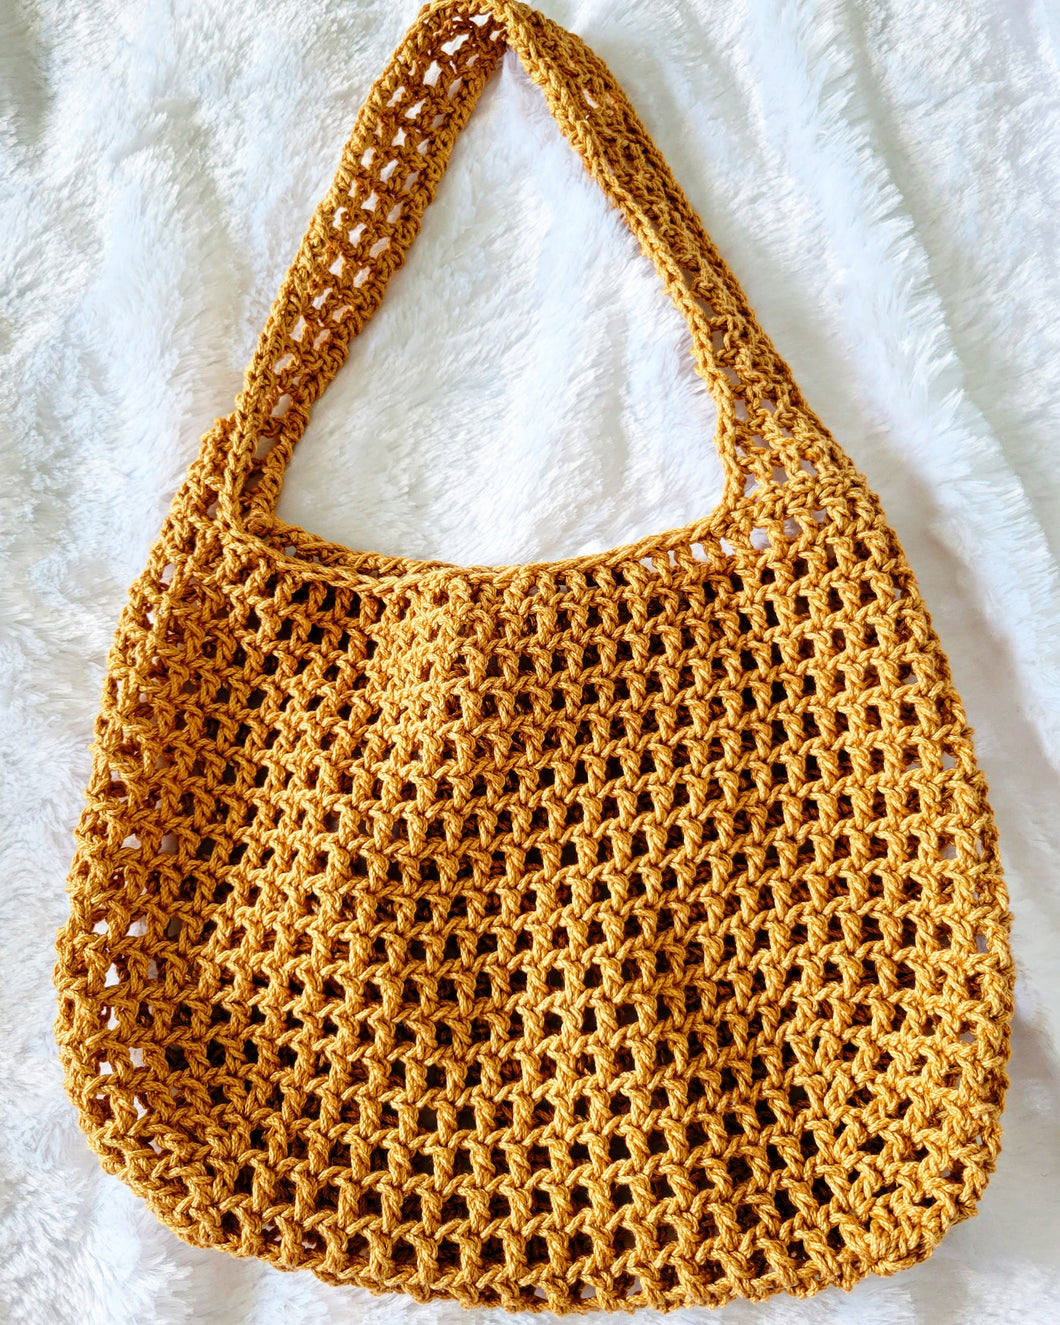 The Net Bag Crochet Pattern